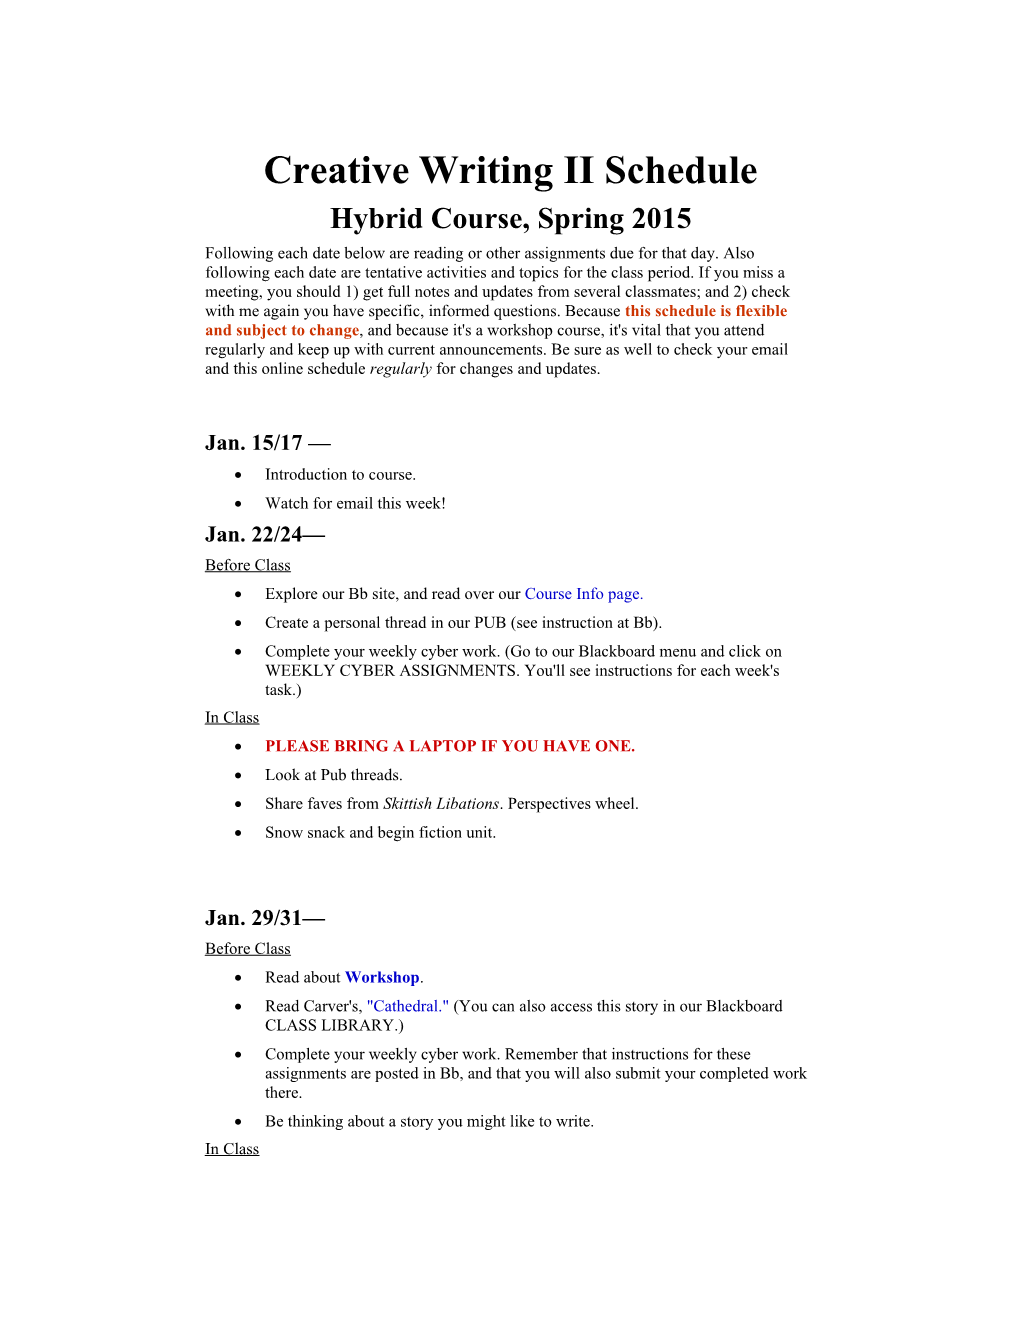 Creative Writing II Schedule 1